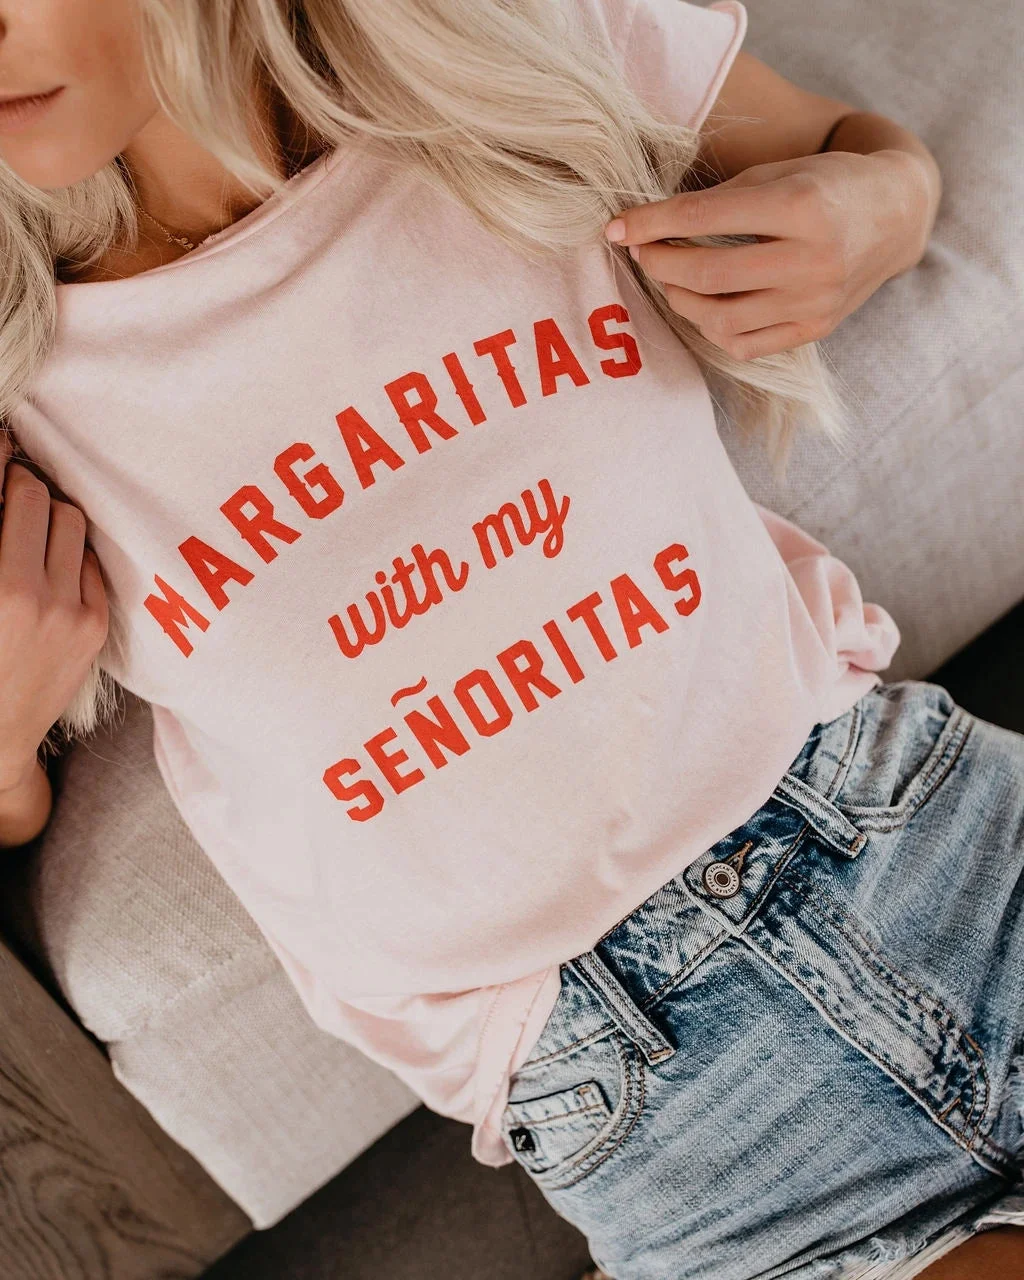 MARGARITAS WITH MY SEÑORITAS Cotton T-shirt